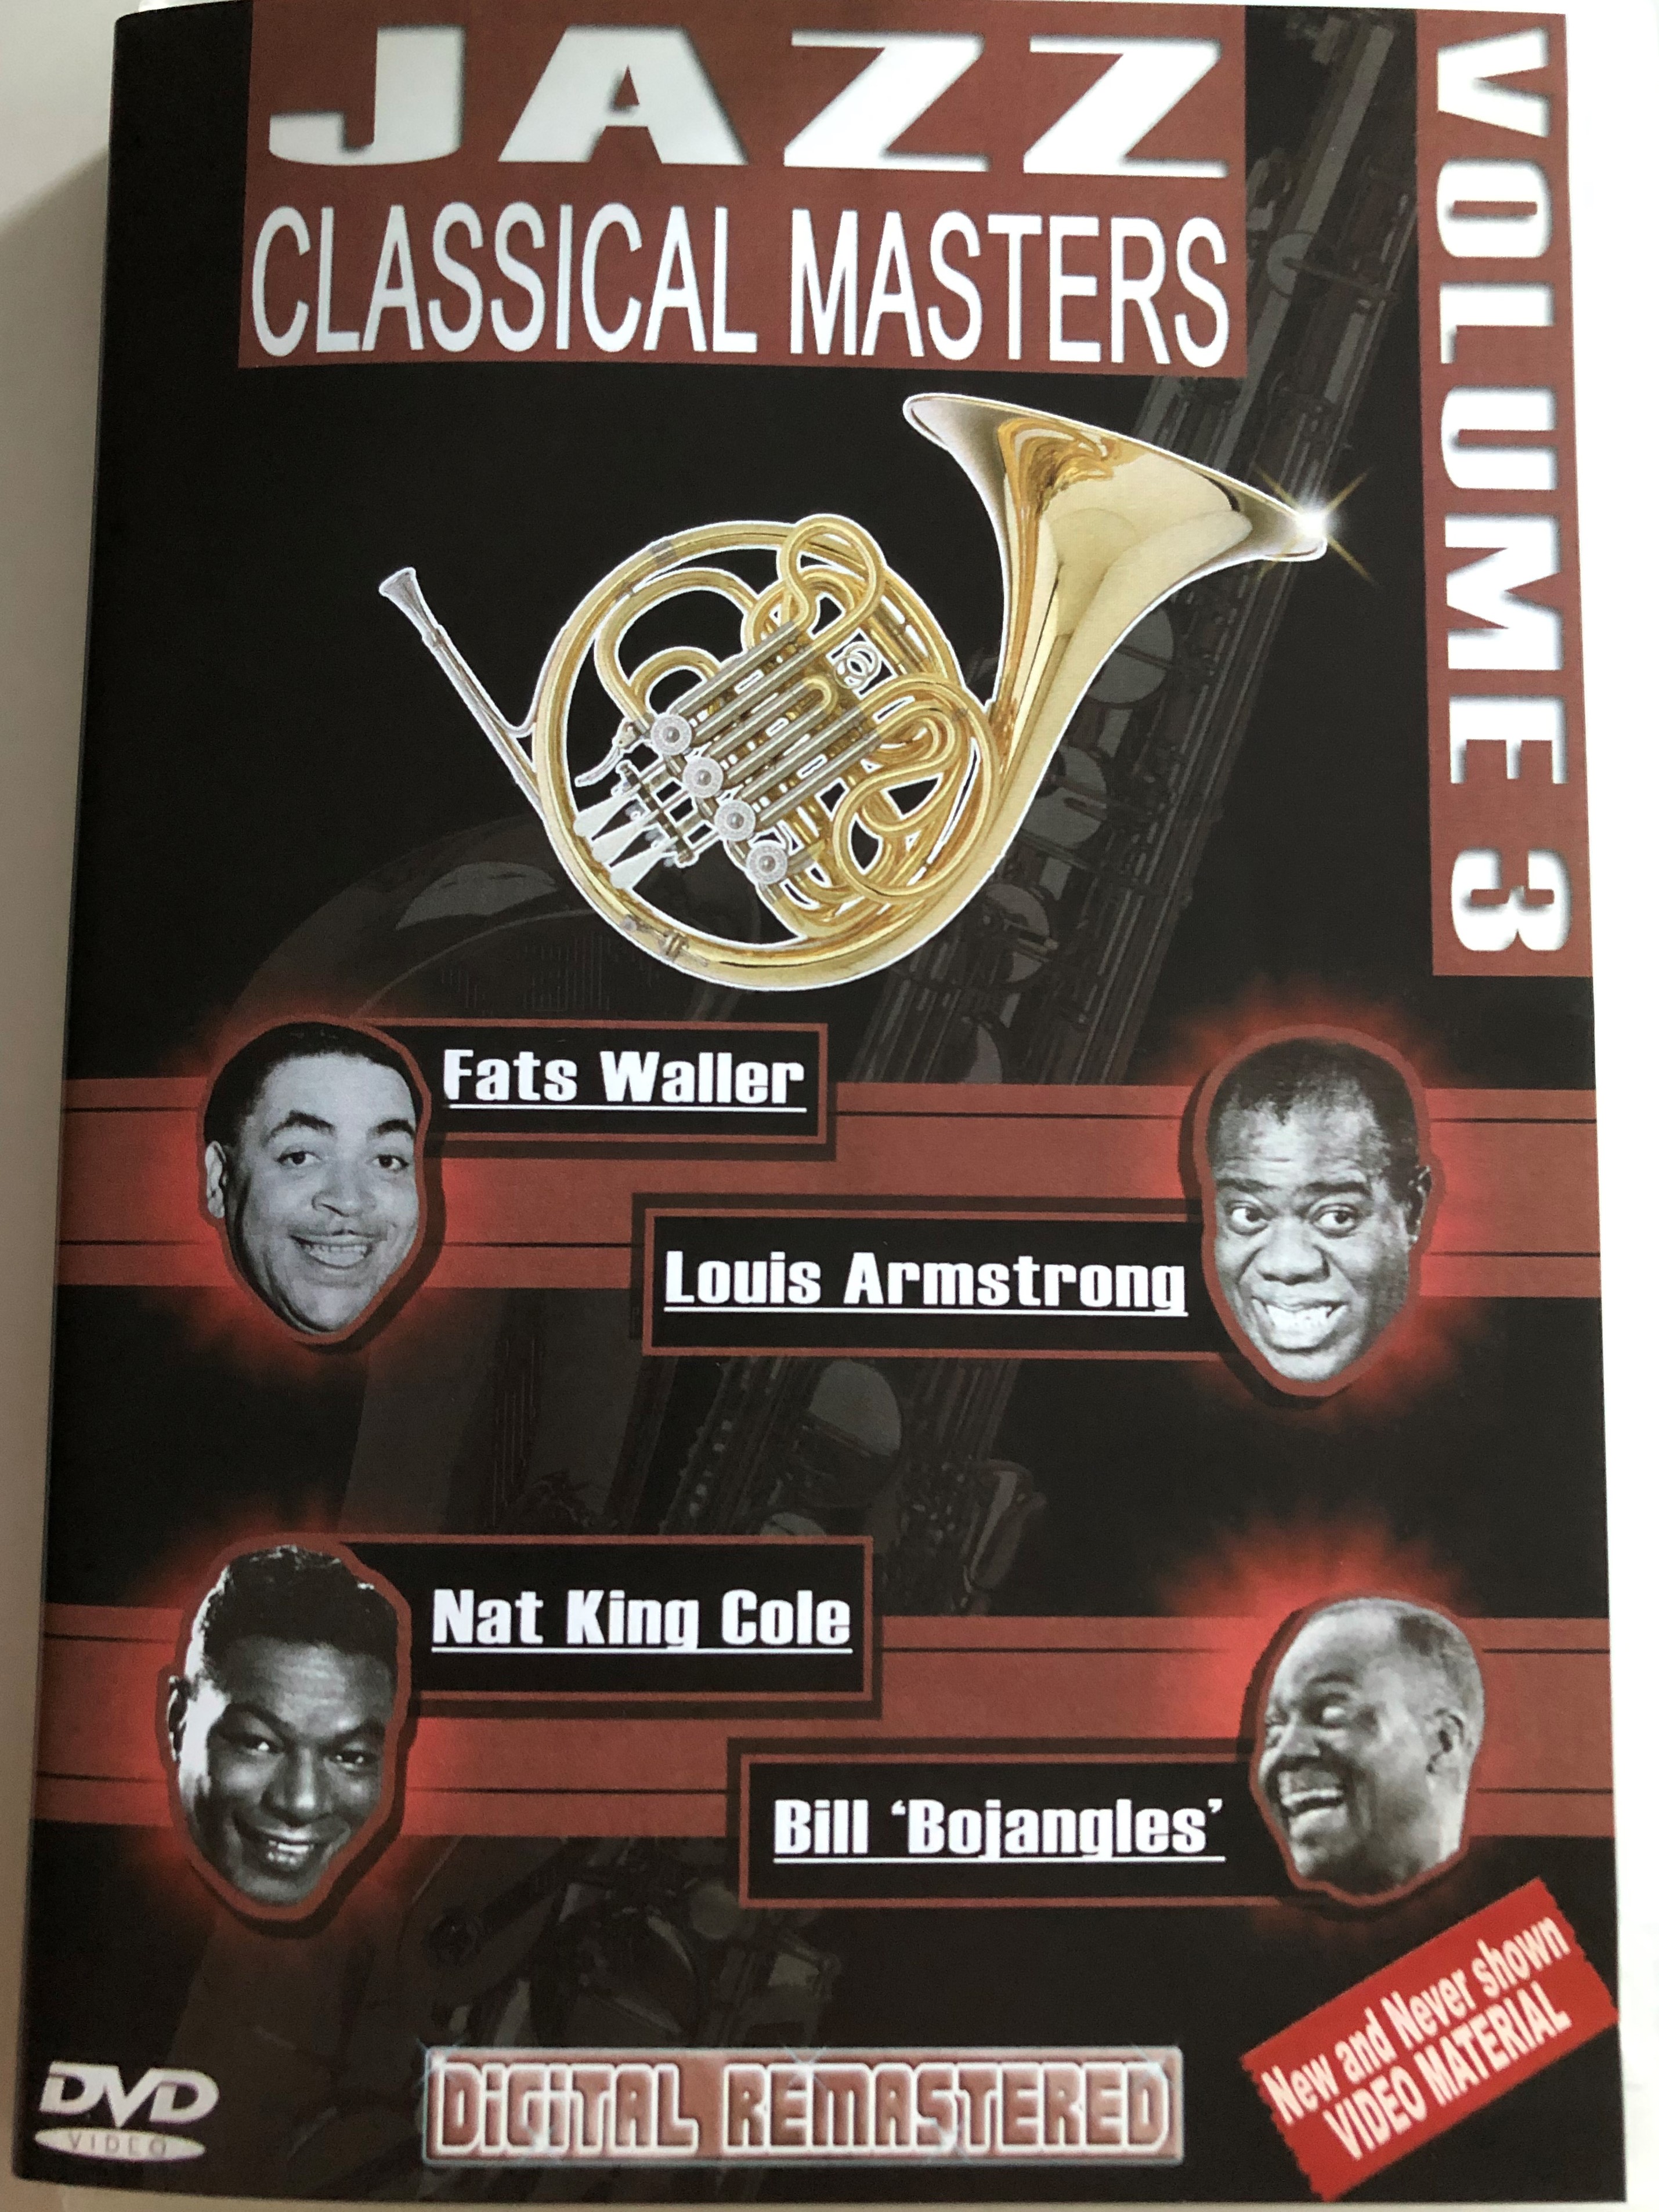 jazz-classical-masters-vol.-3-dvd-fats-waller-louis-armstrong-nat-king-cole-bill-bojangles-digitally-remastered-1-.jpg